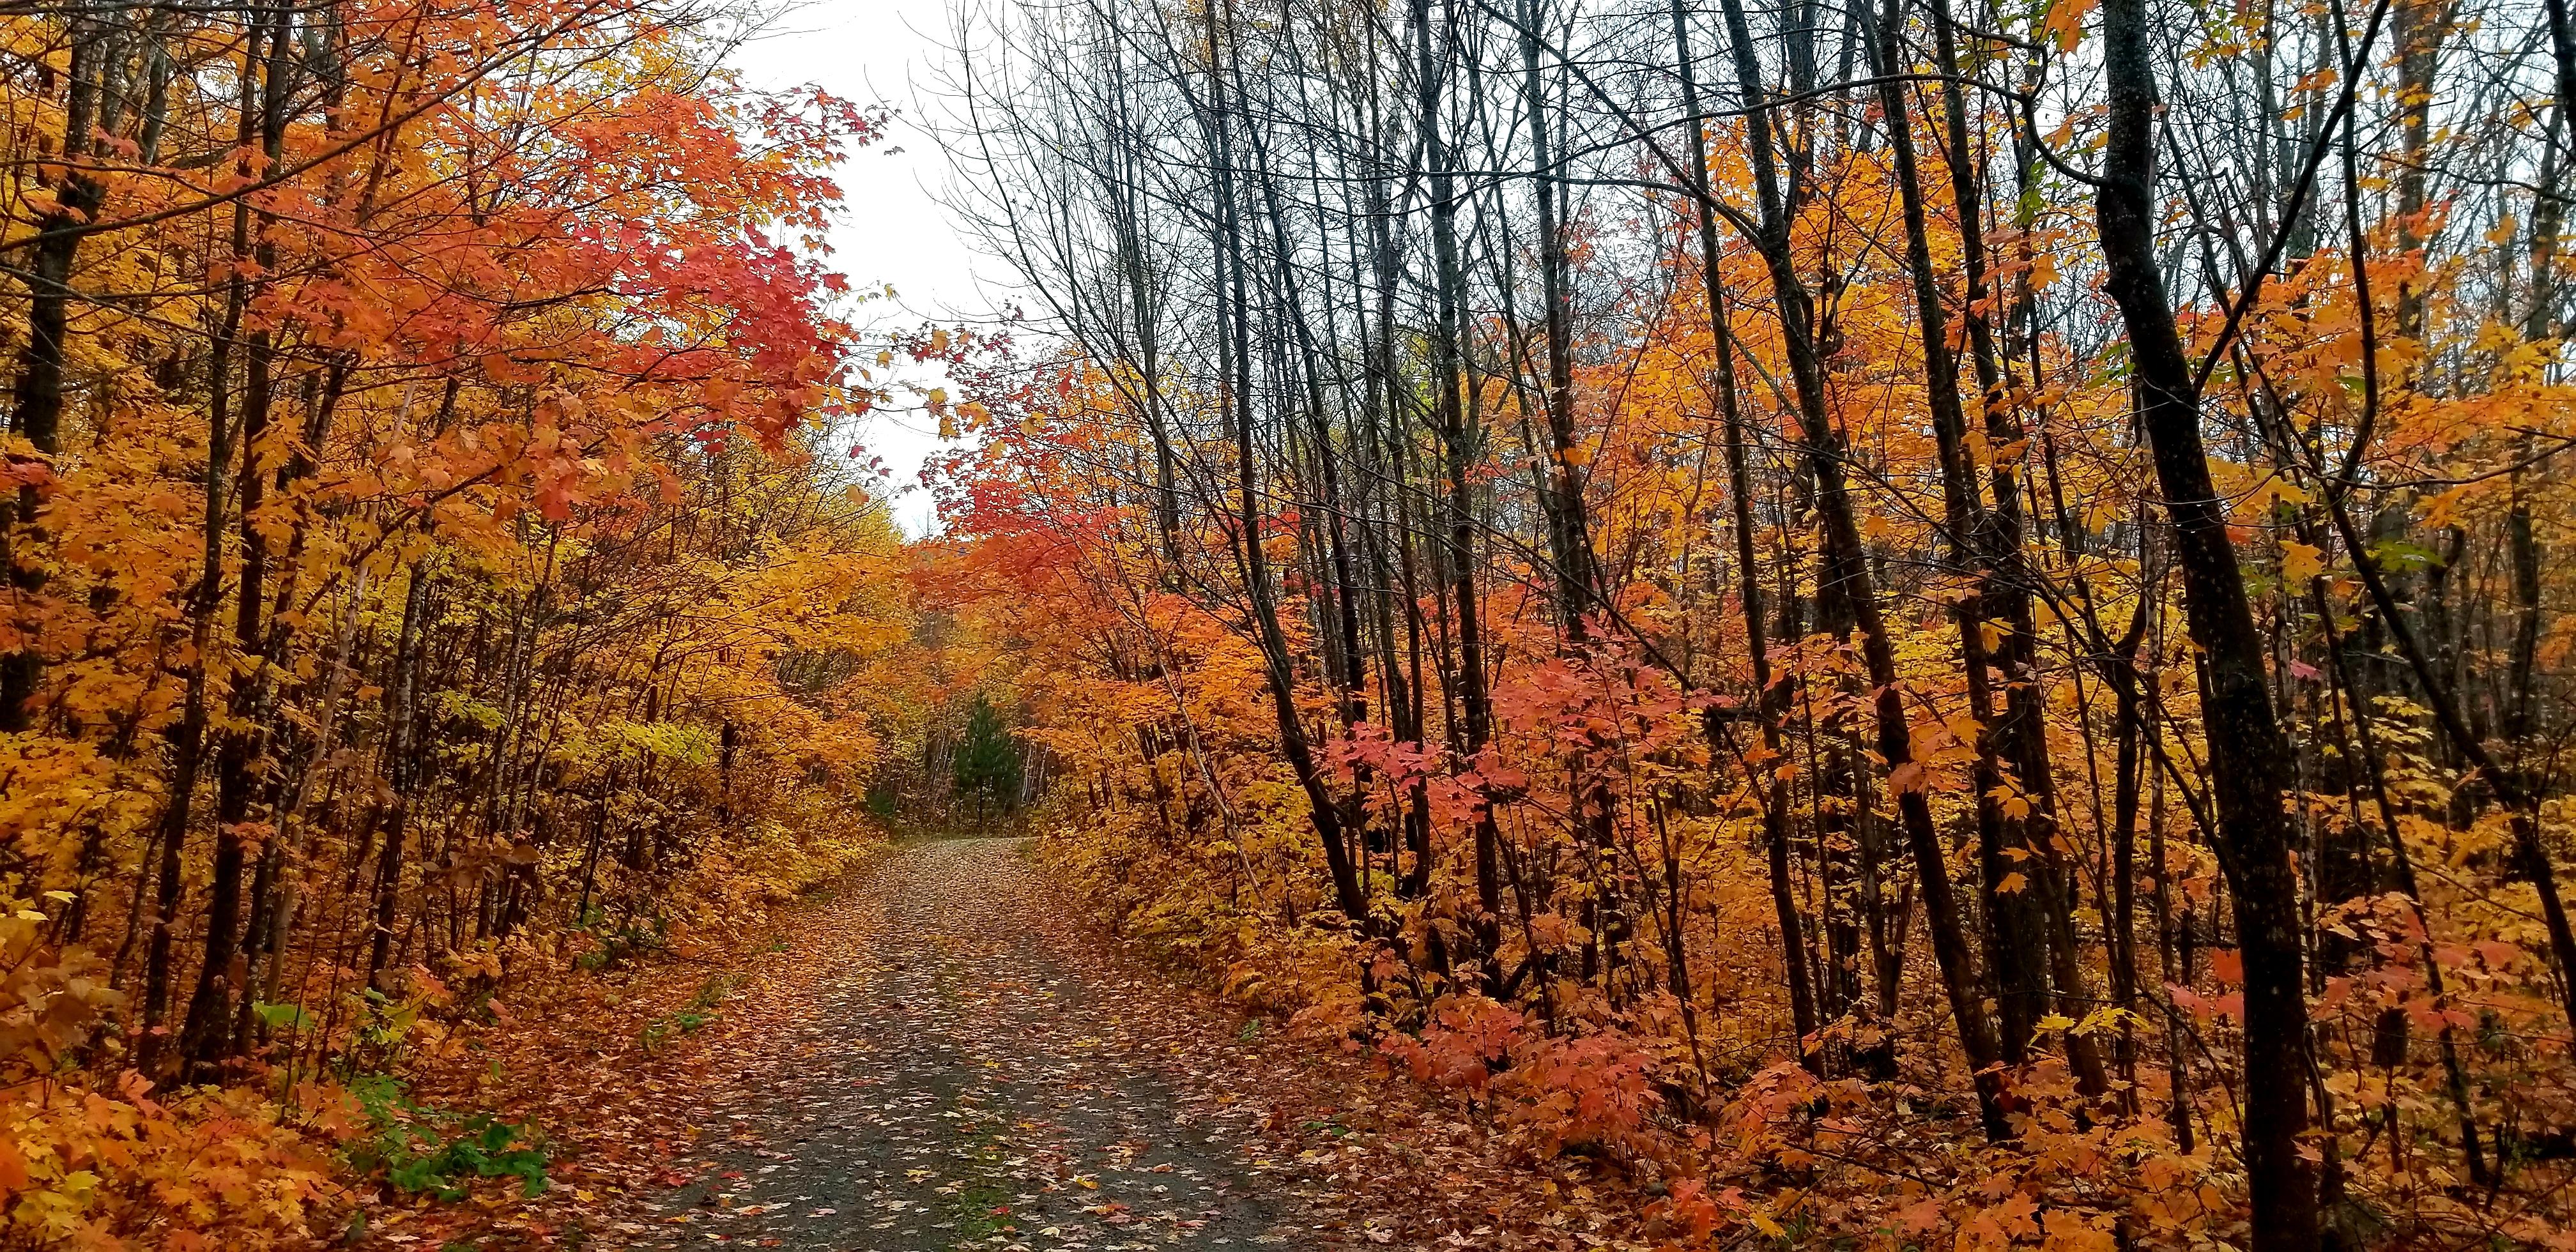 Autumn foliage along a dirt logging road.